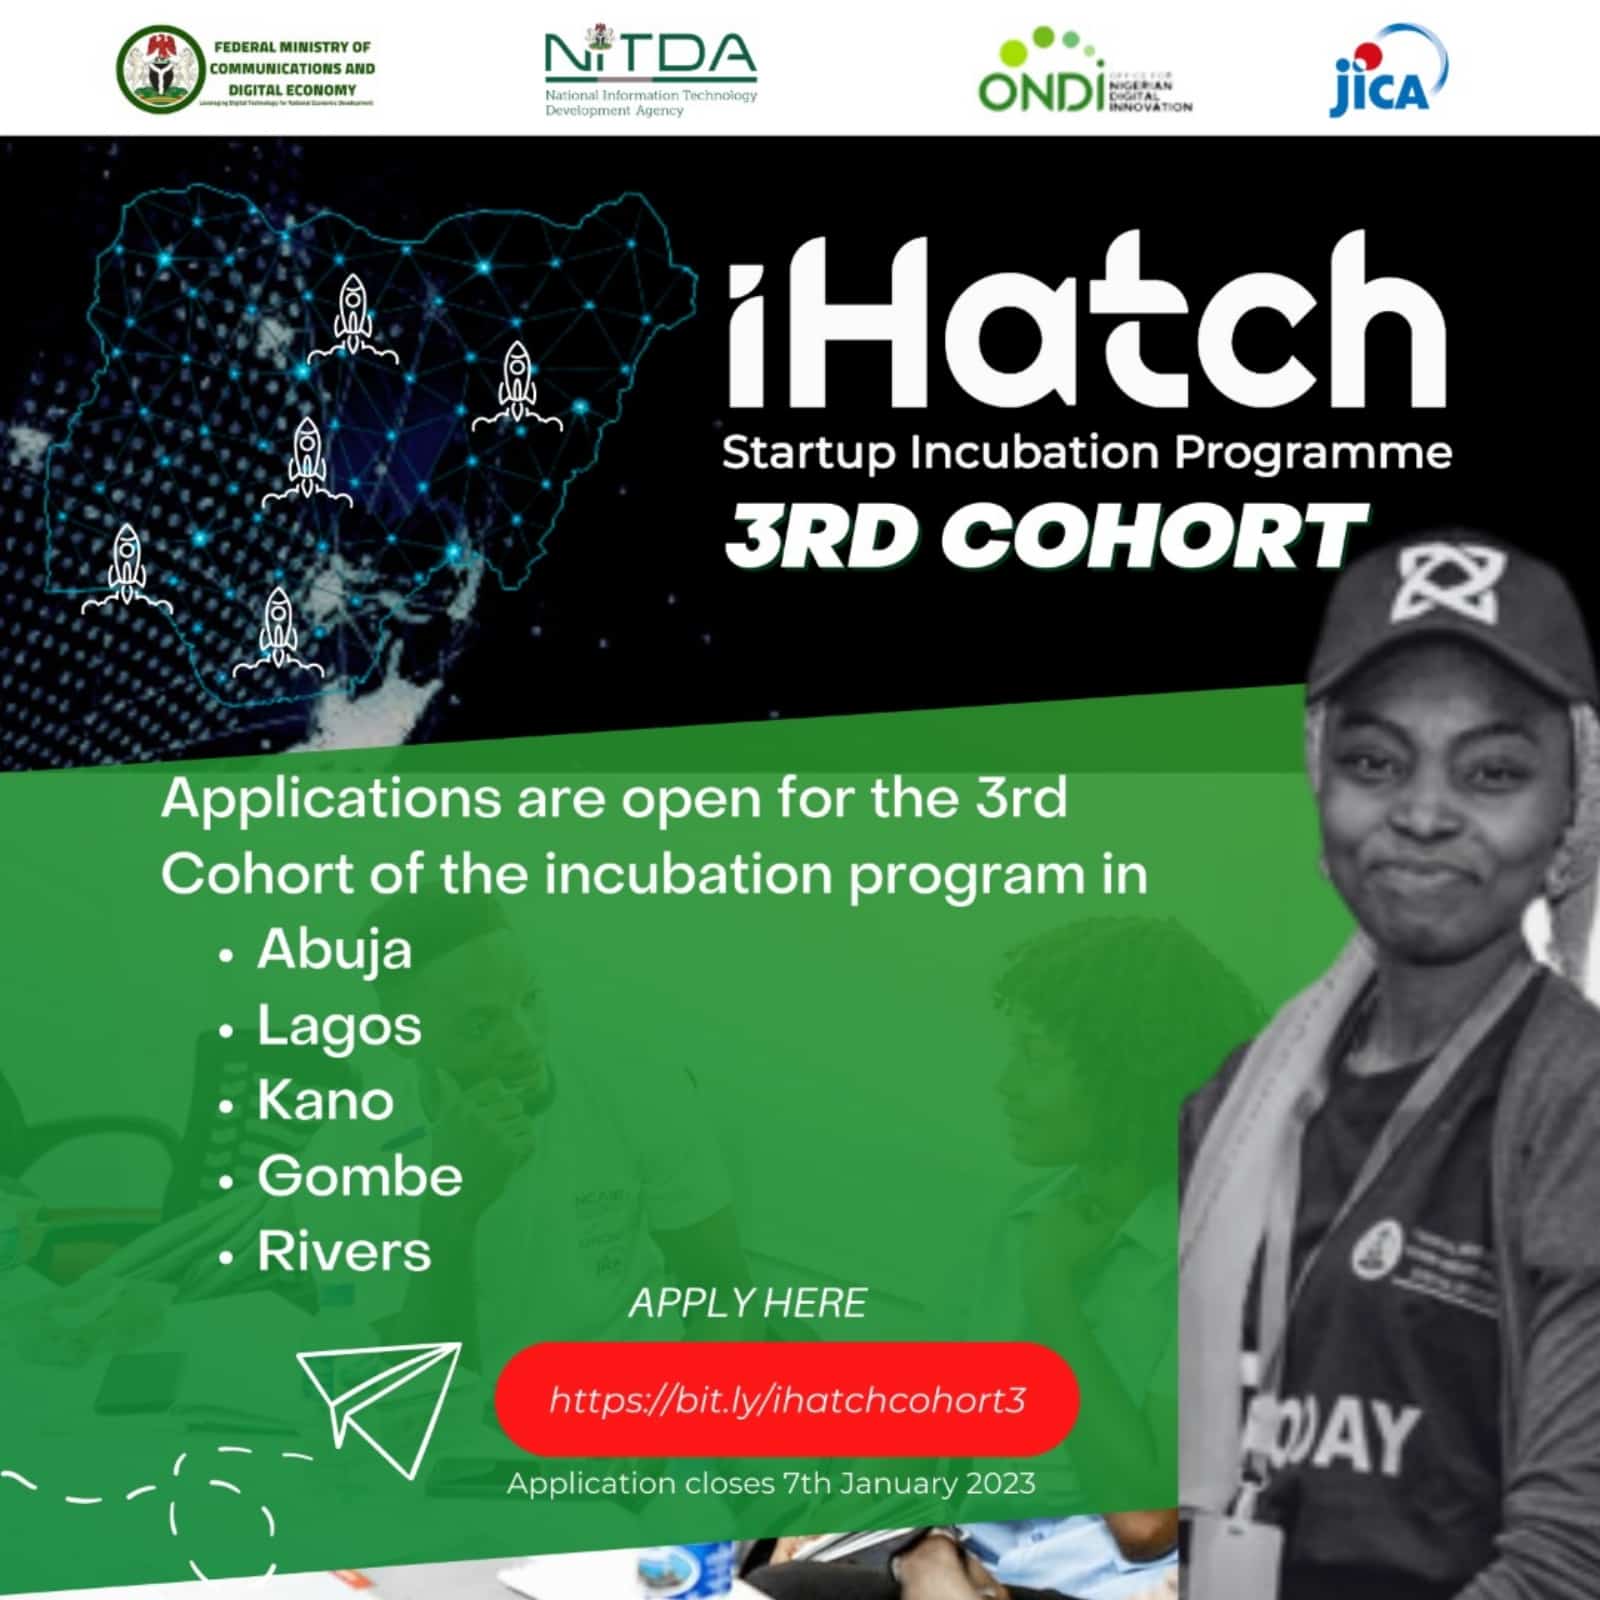 NITDA iHatch Startup Incubation Programme